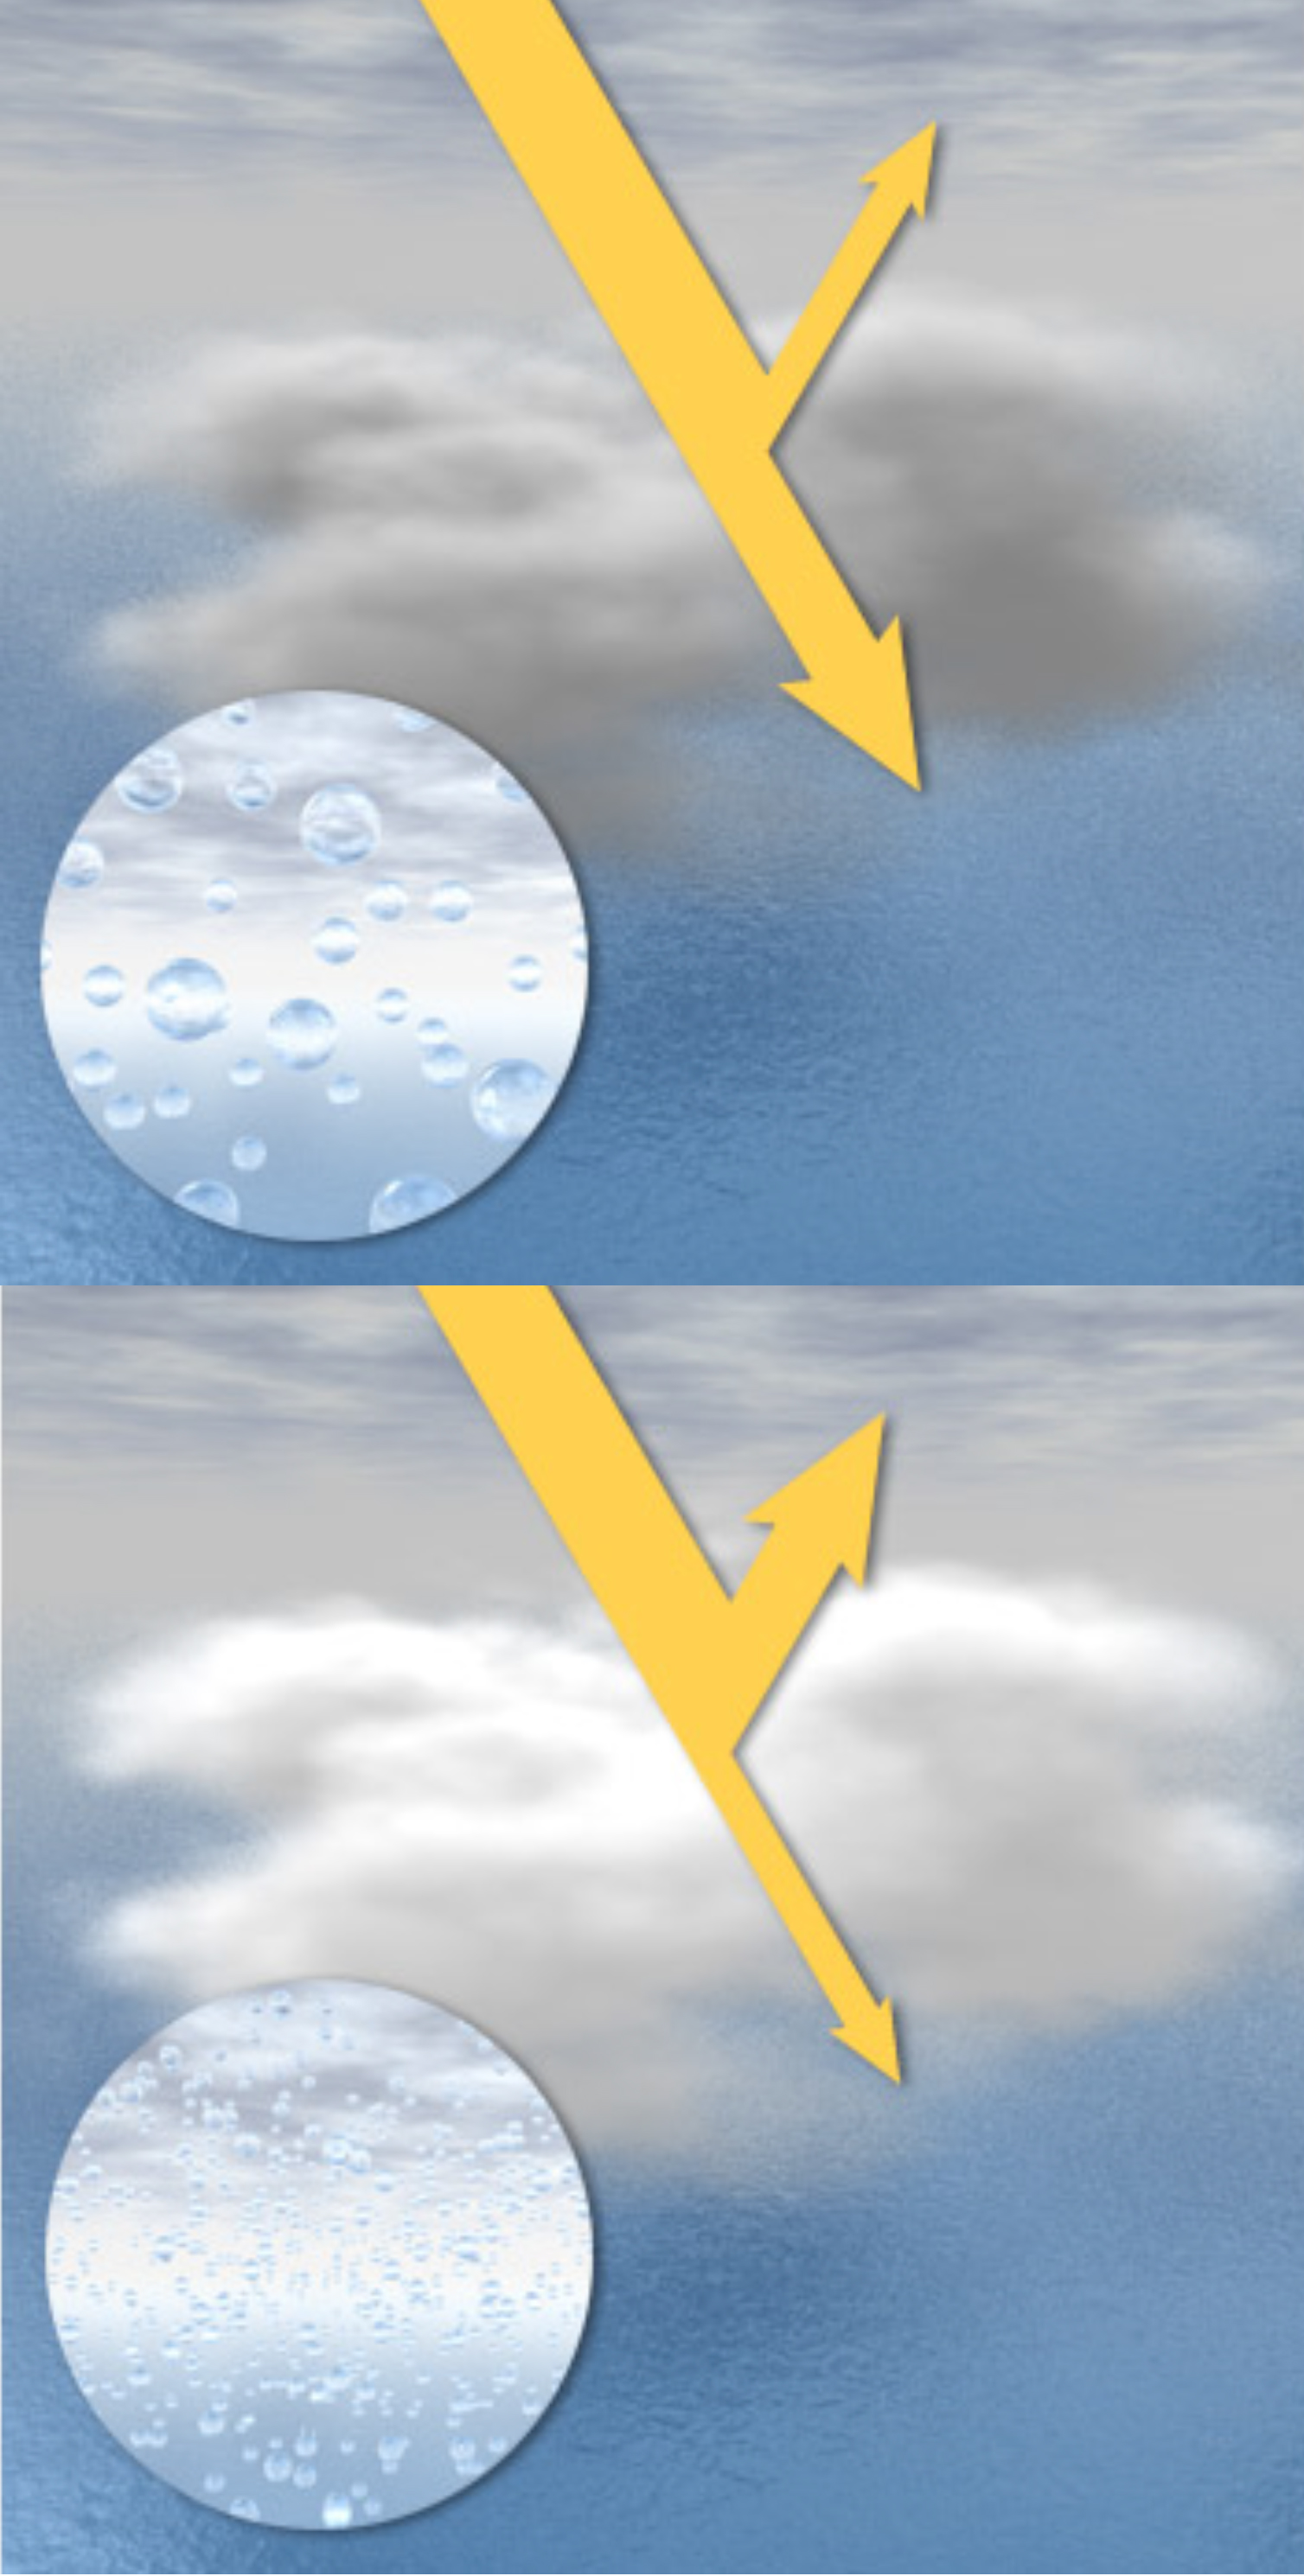 Cloud and aerosol interaction cartoon